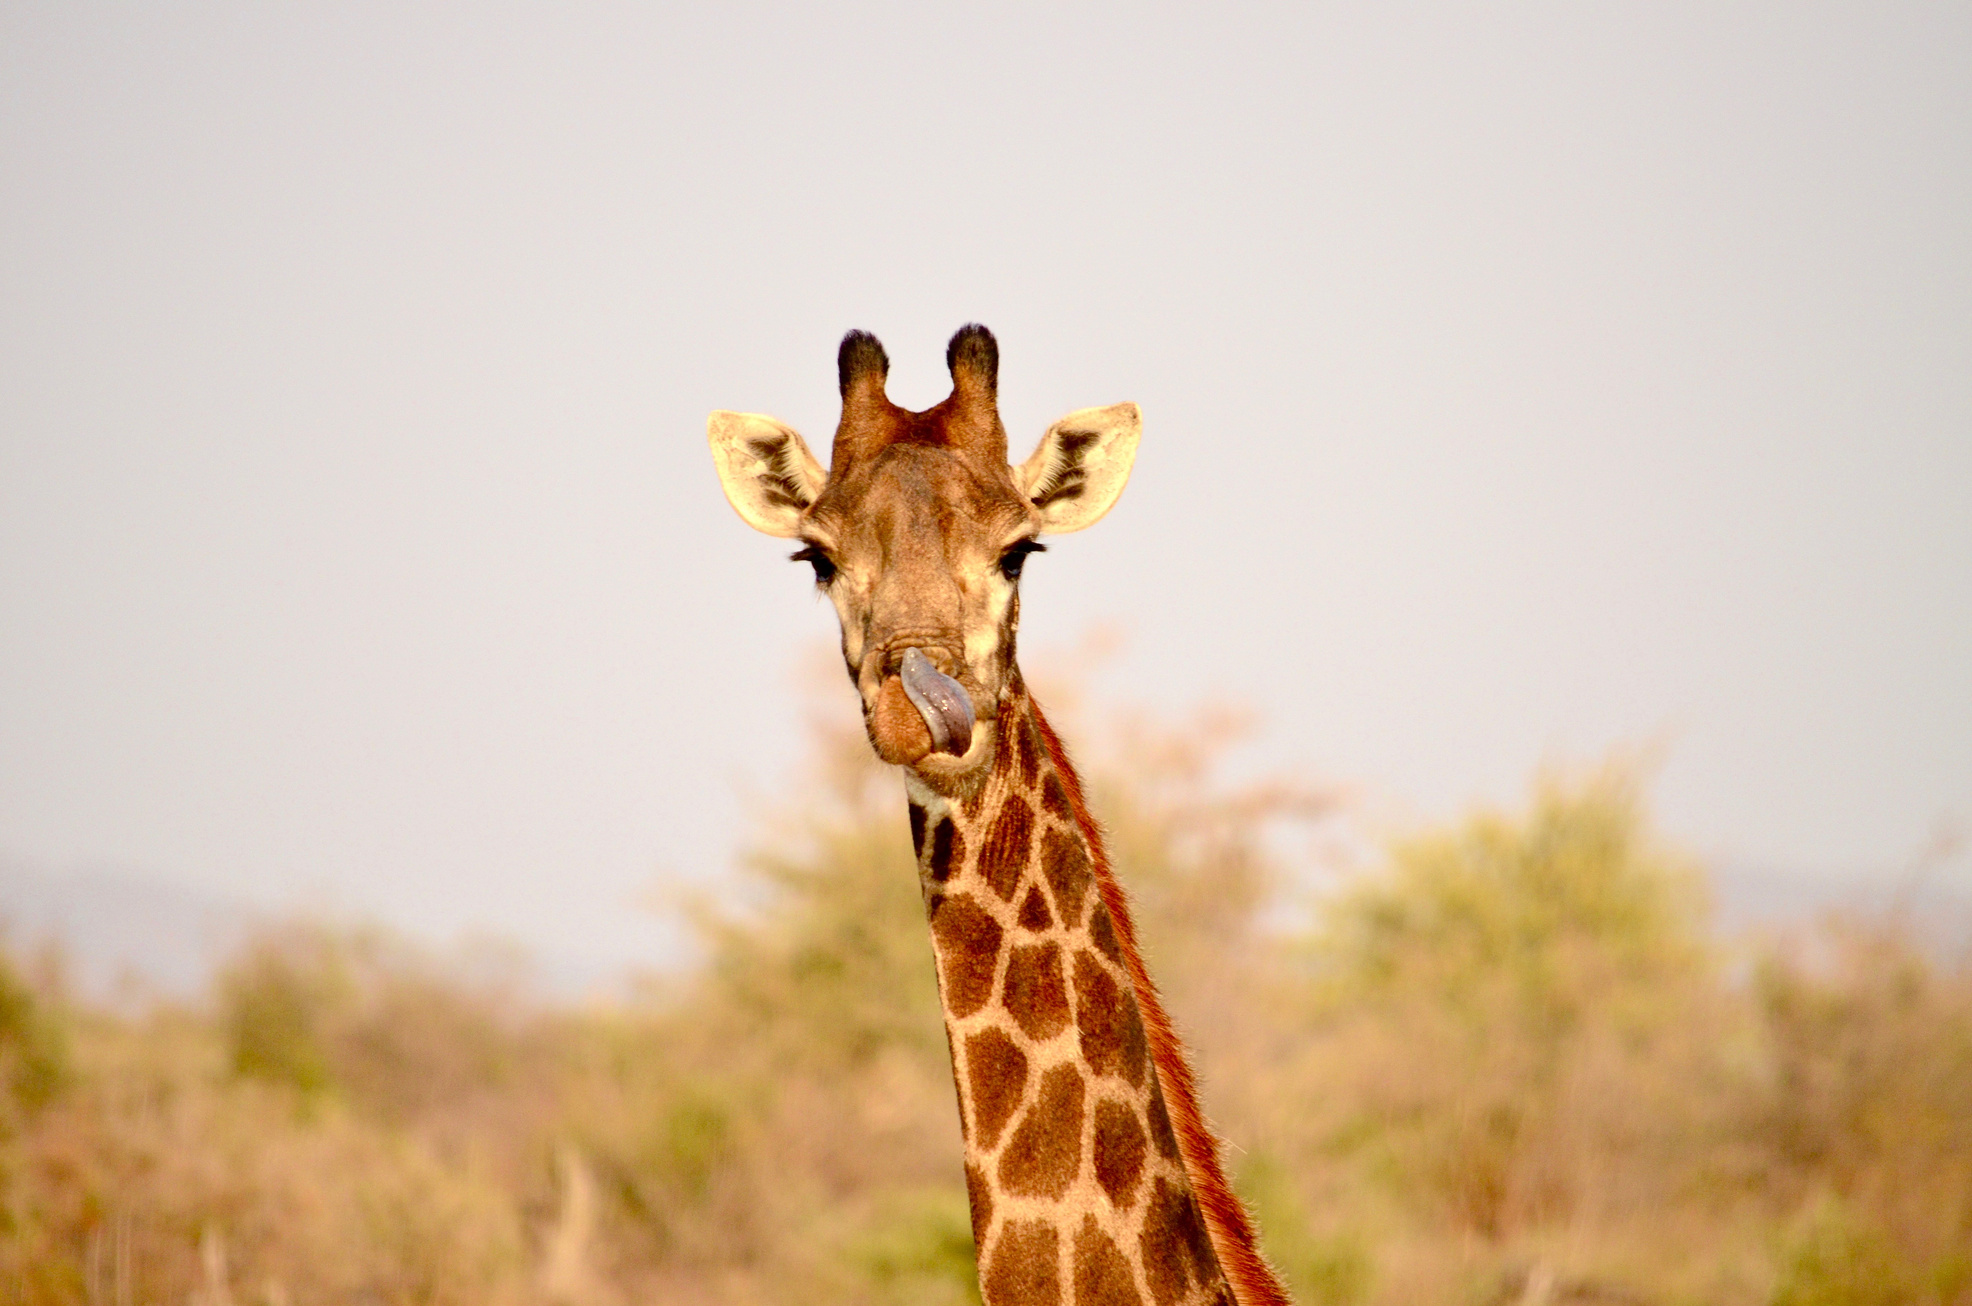 Giraffe Licking Its Nose